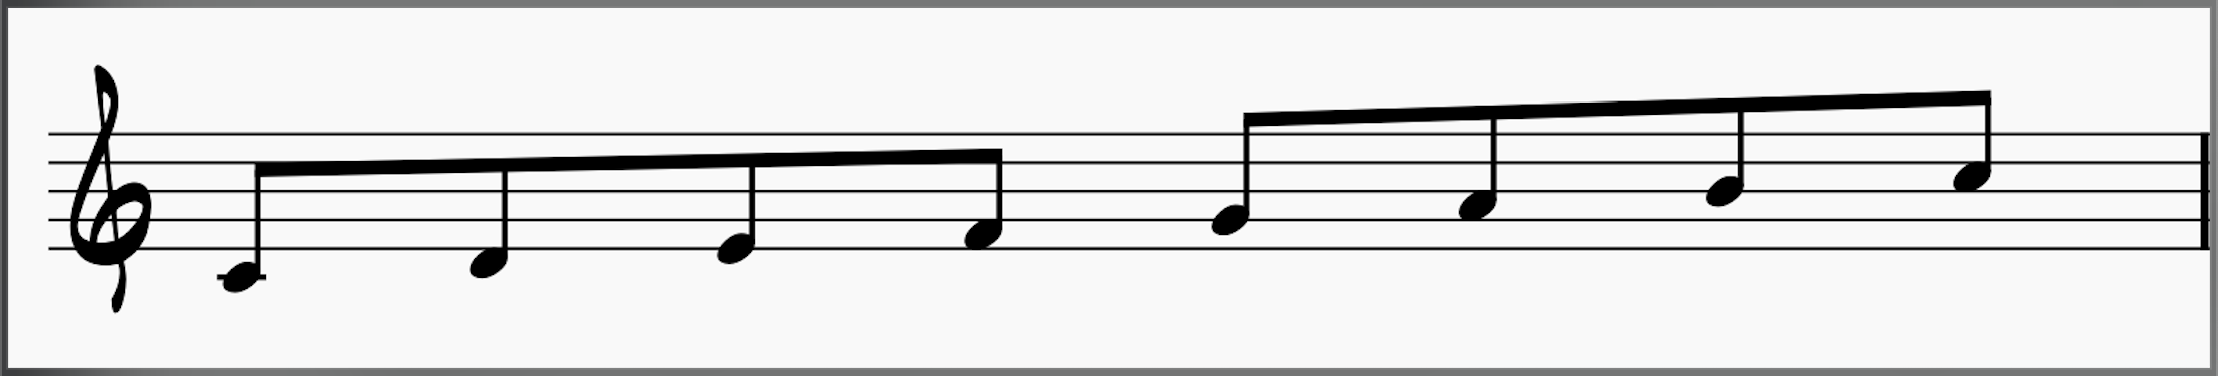 C major scale on treble clef